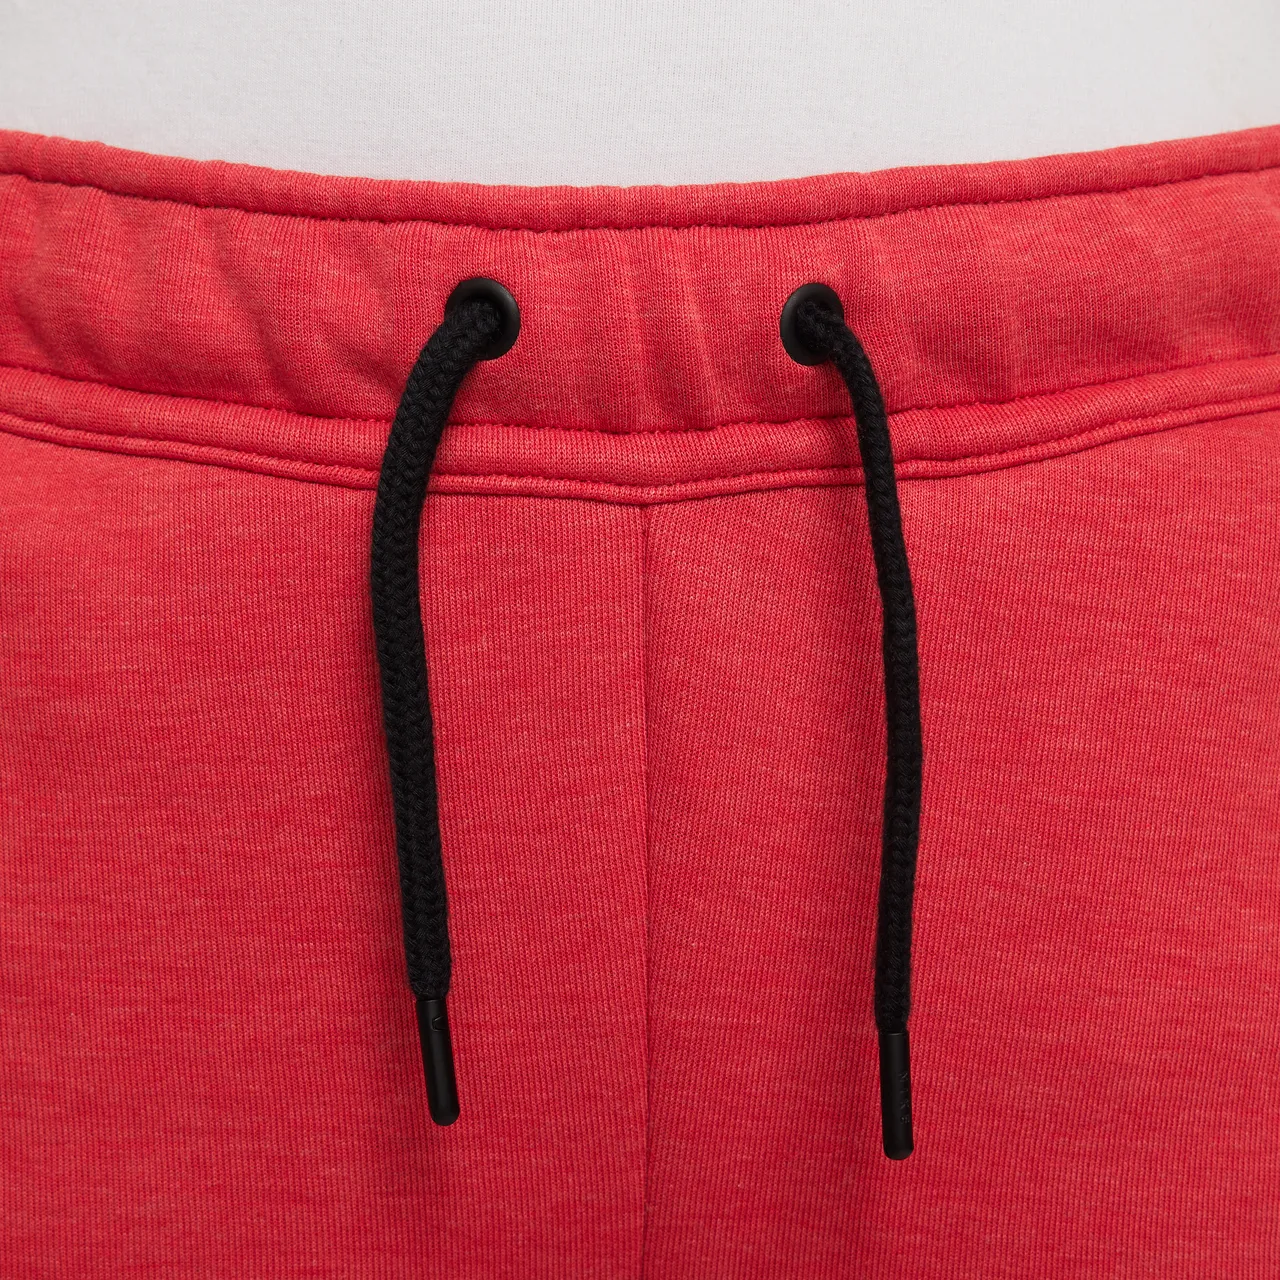 Nike Sportswear Tech Fleece Hose für ältere Kinder (Jungen) - Rot